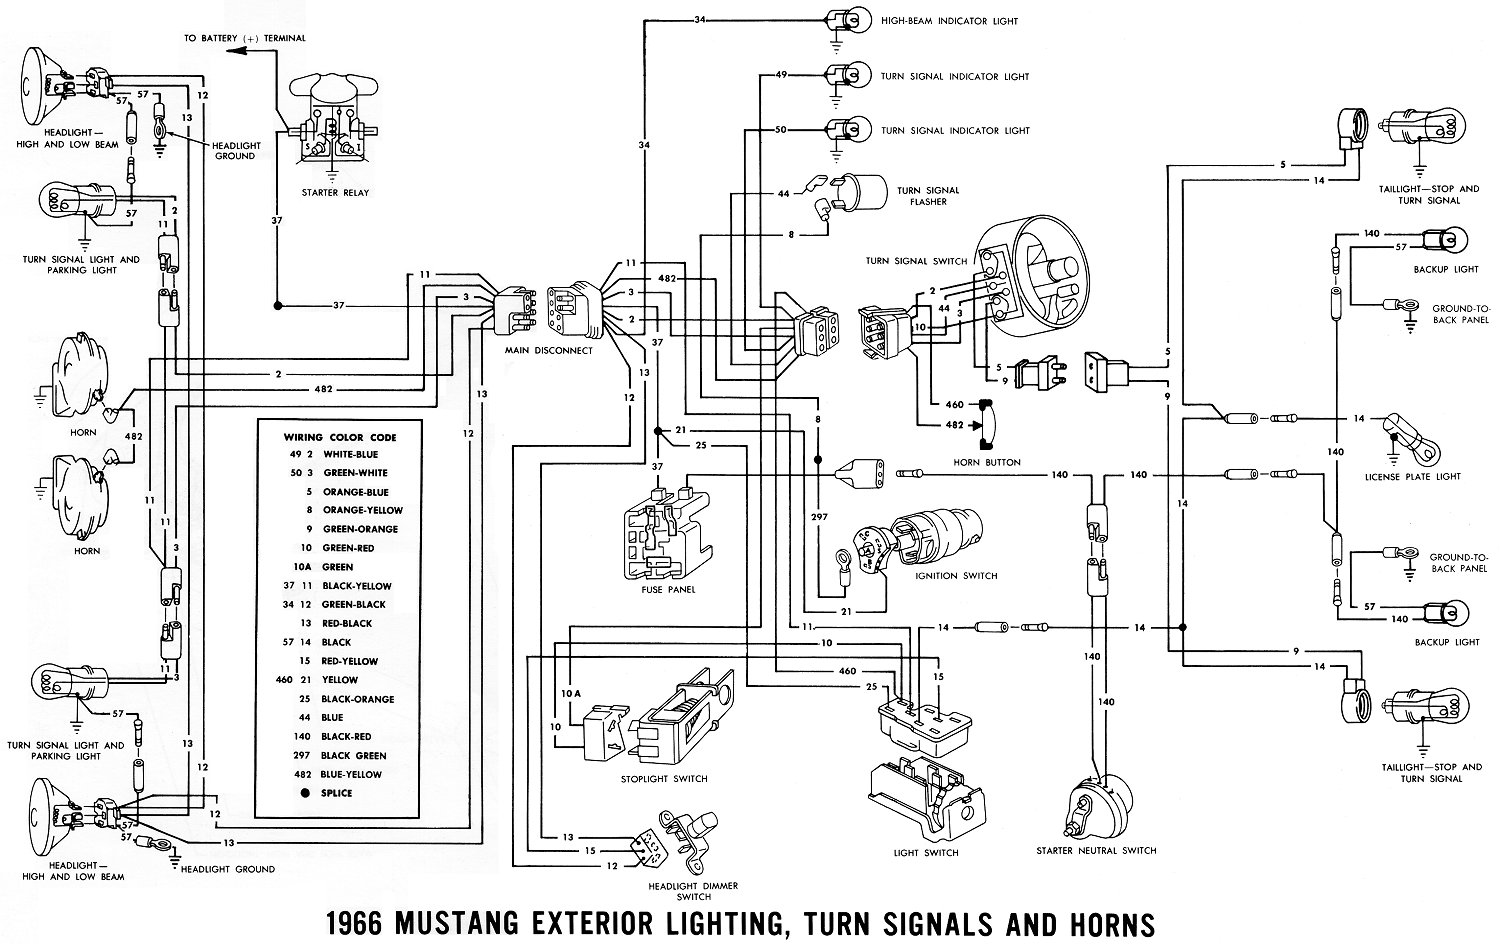 Alternator Wiring Diagram Jeep from midlife66.com